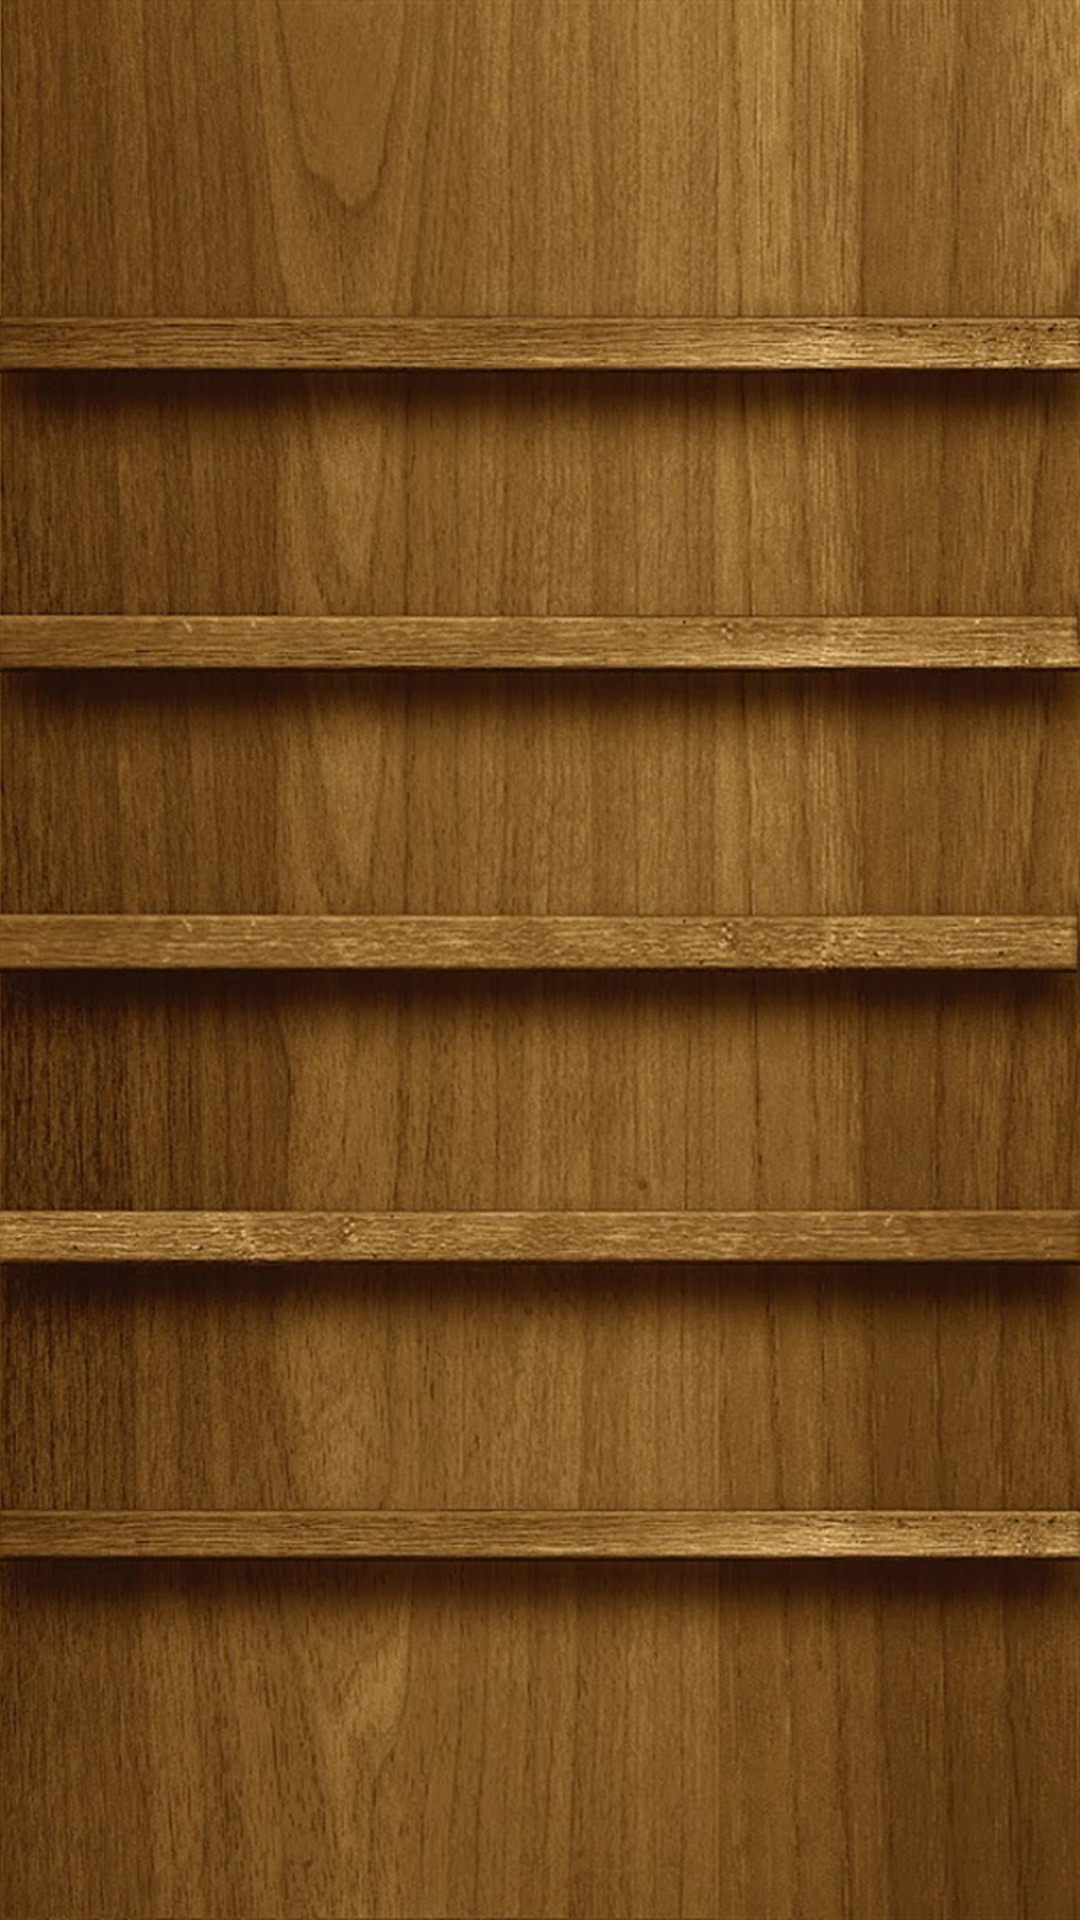 Shelves Wallpaper iphone